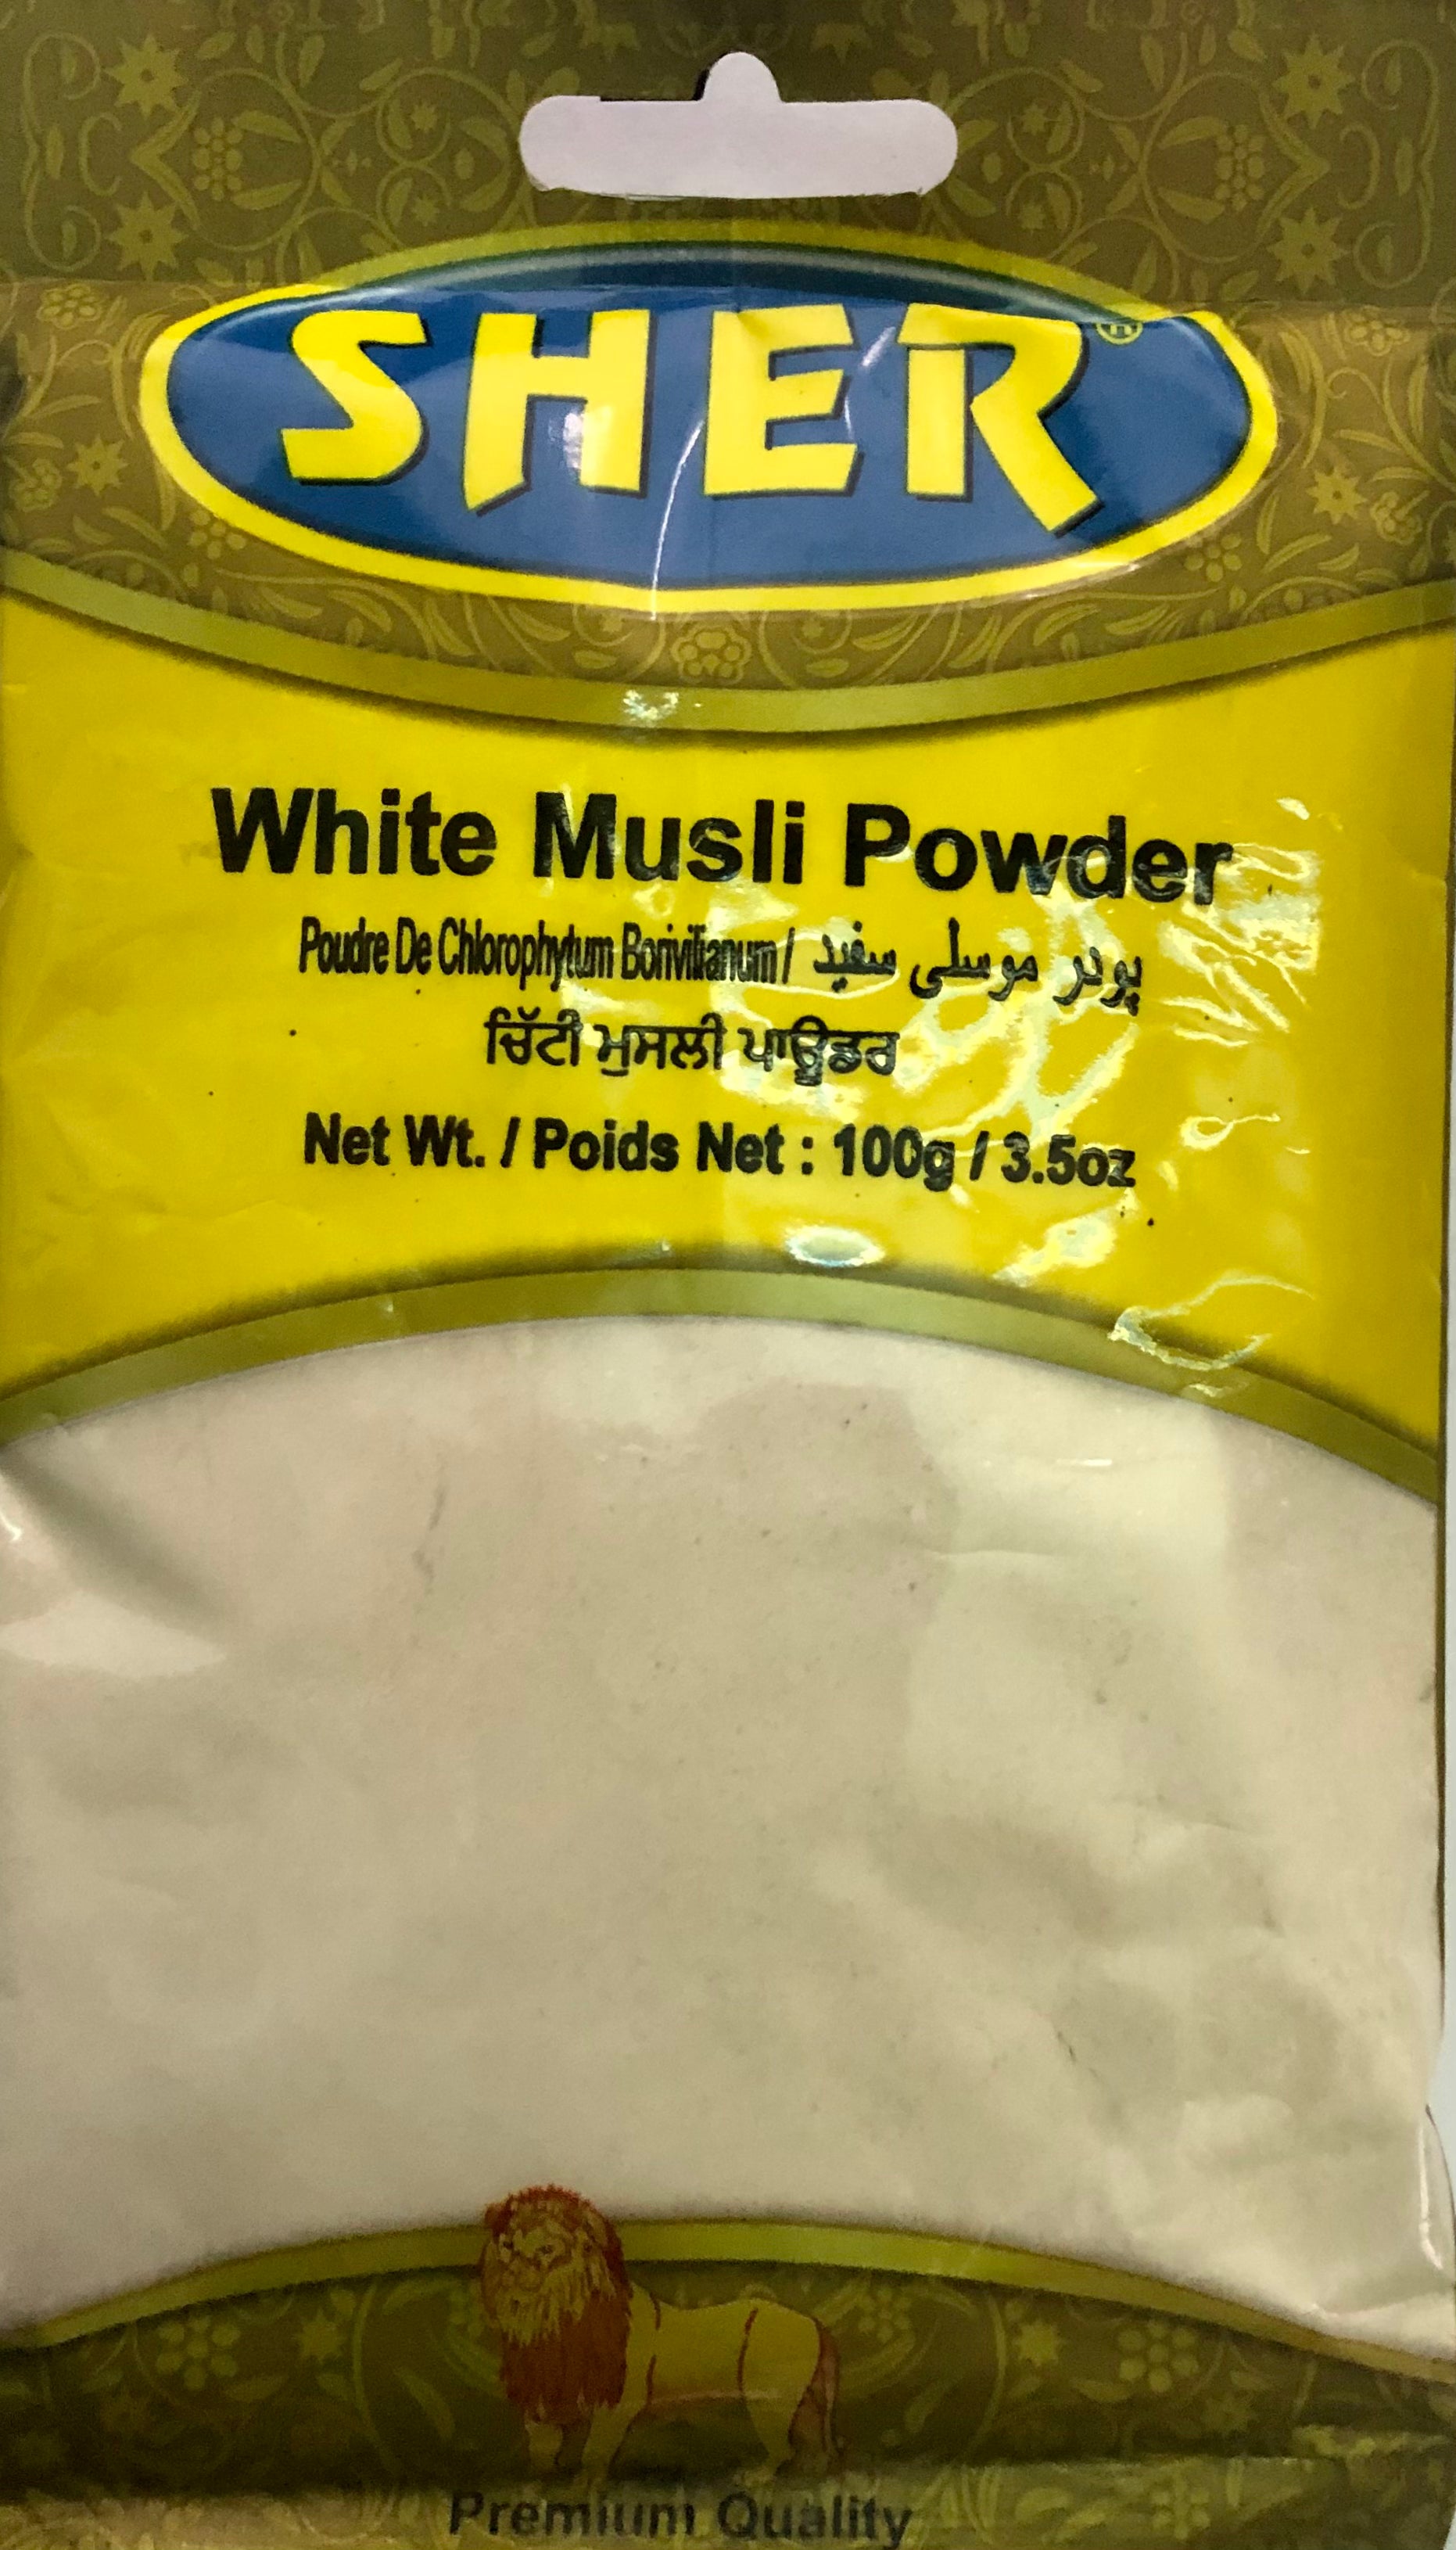 White Musli Powder - Sher - 100g